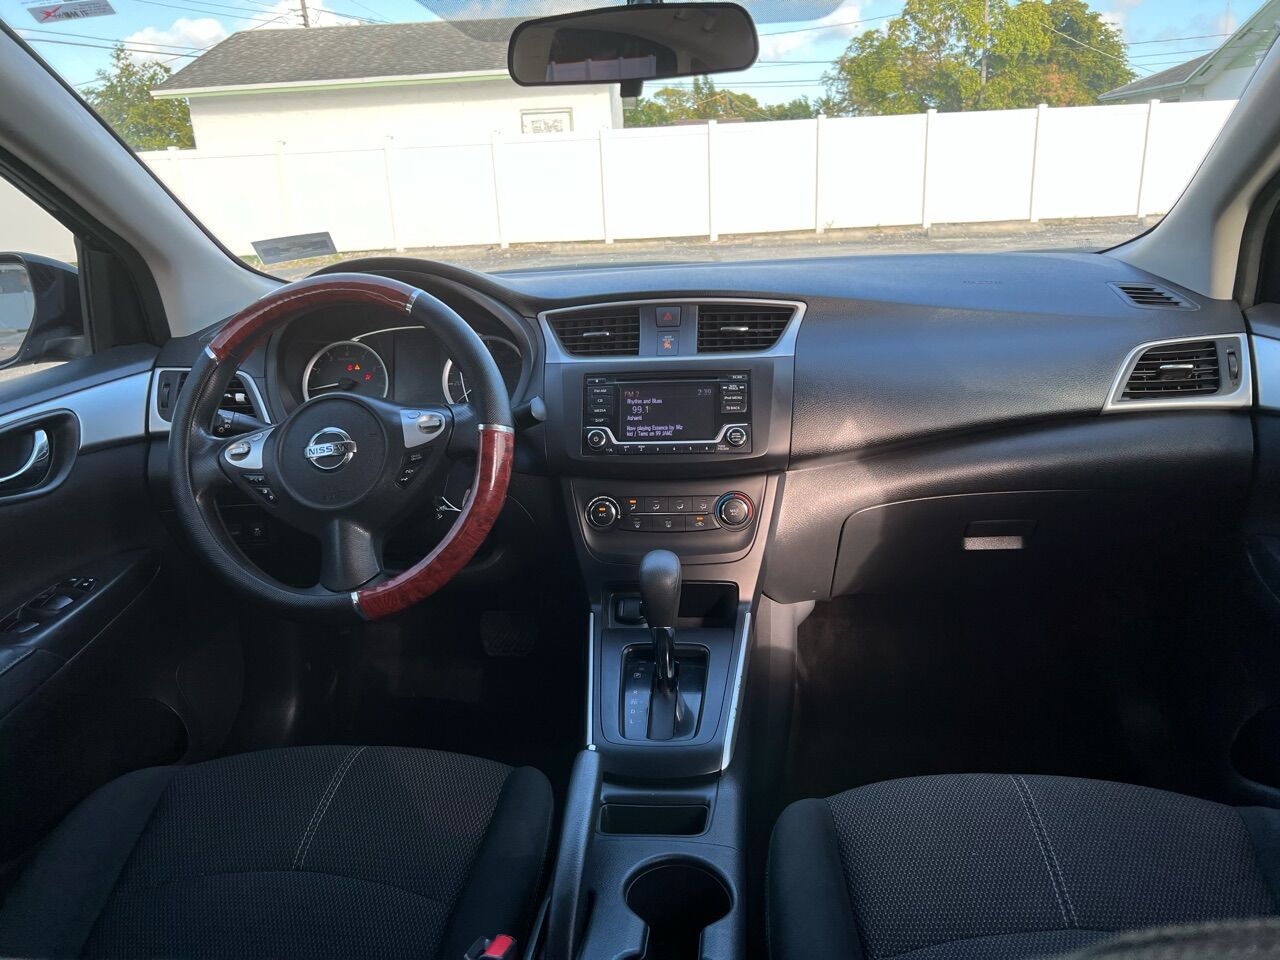 2018 Nissan Sentra  - $12,500